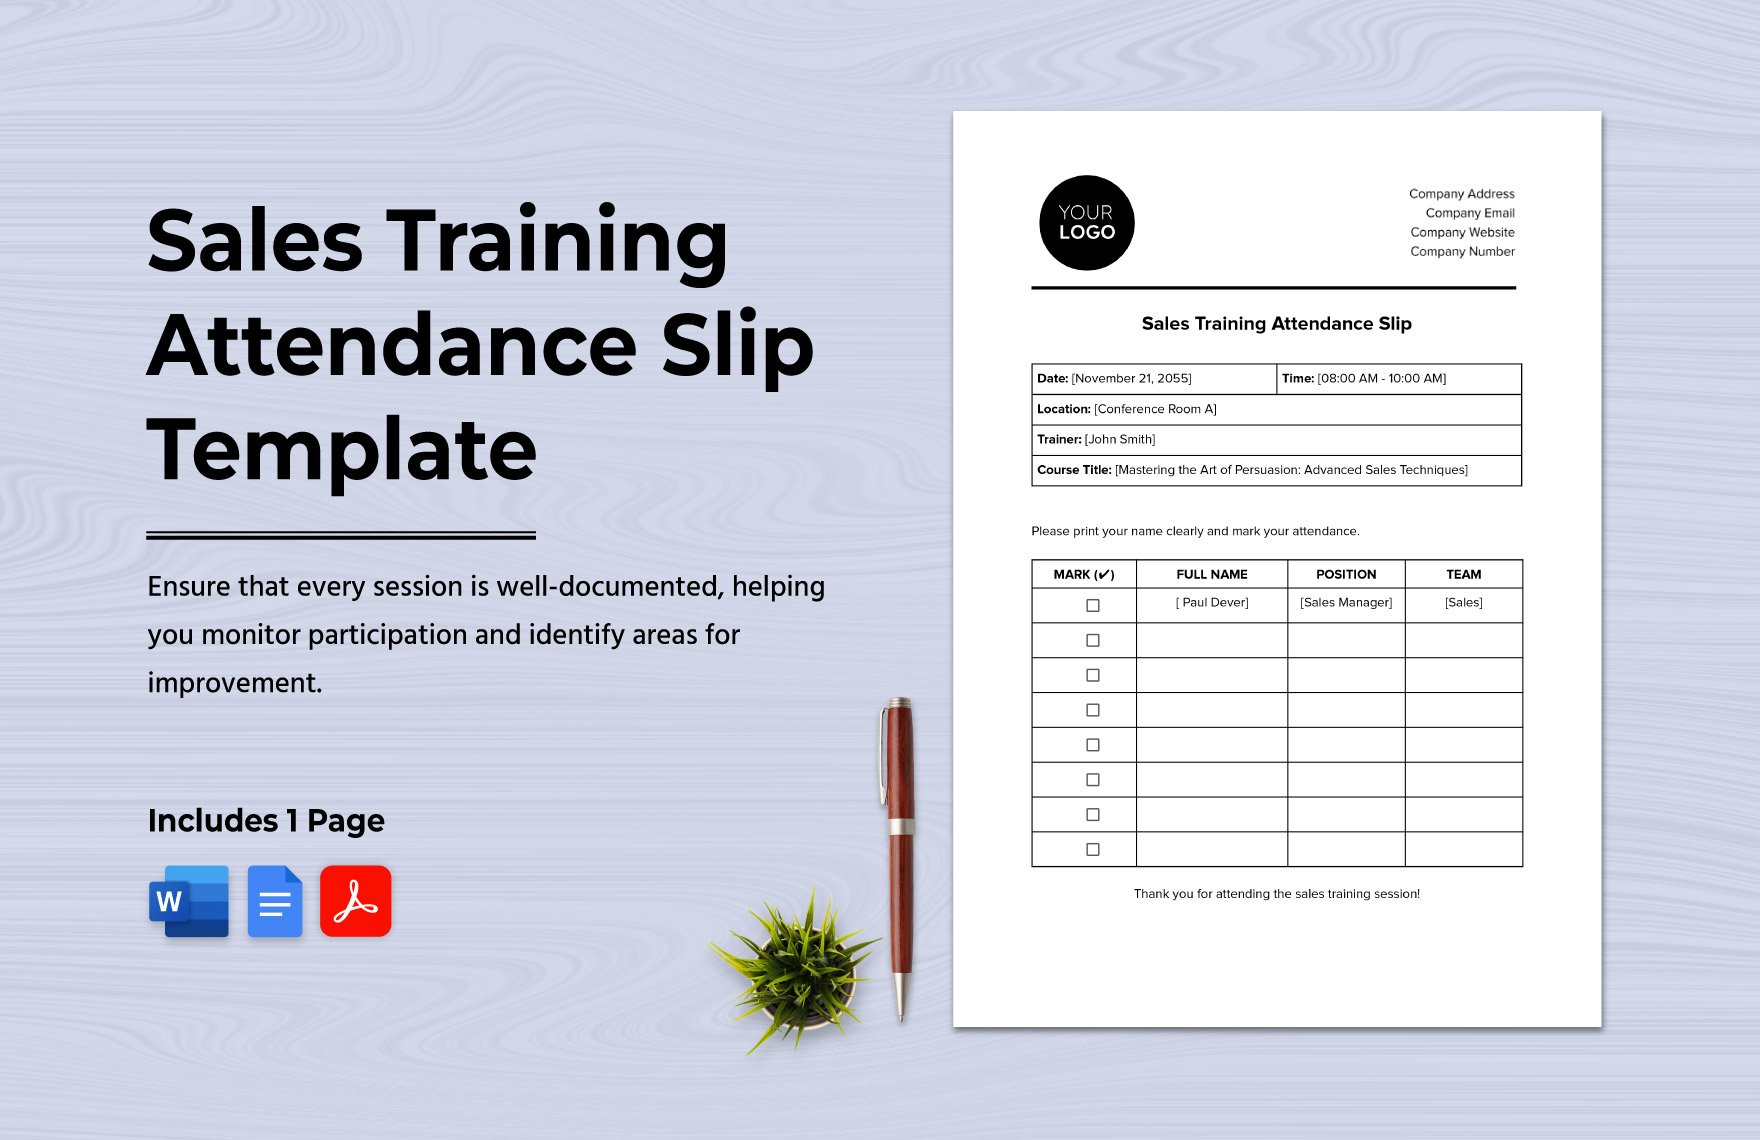 Sales Training Attendance Slip Template